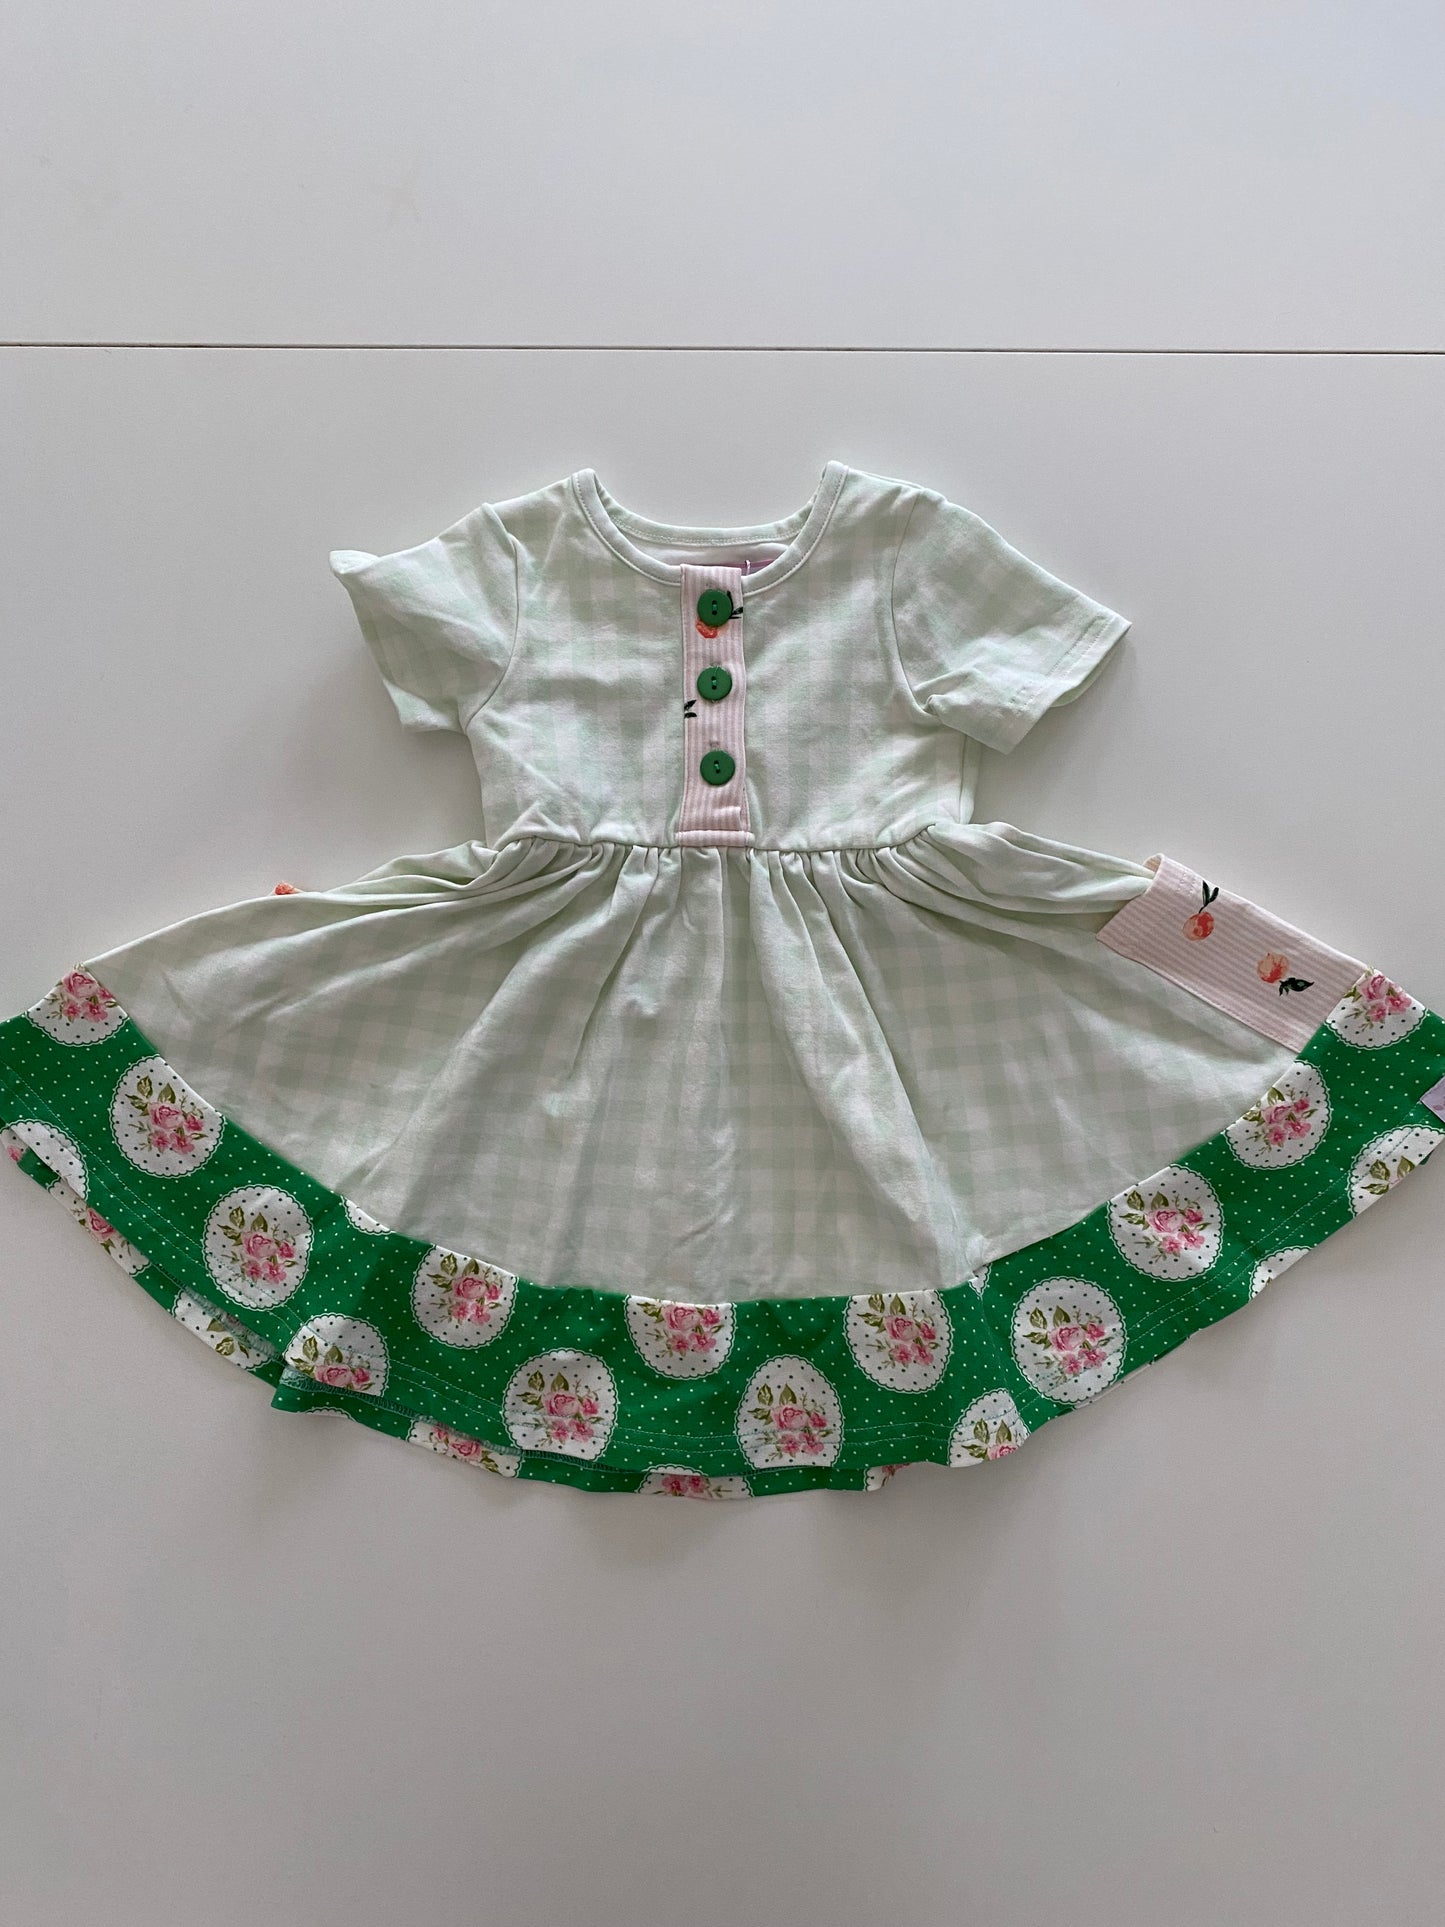 SweetHoney Green Gingham and Peach Print Dress Girls 18M, New